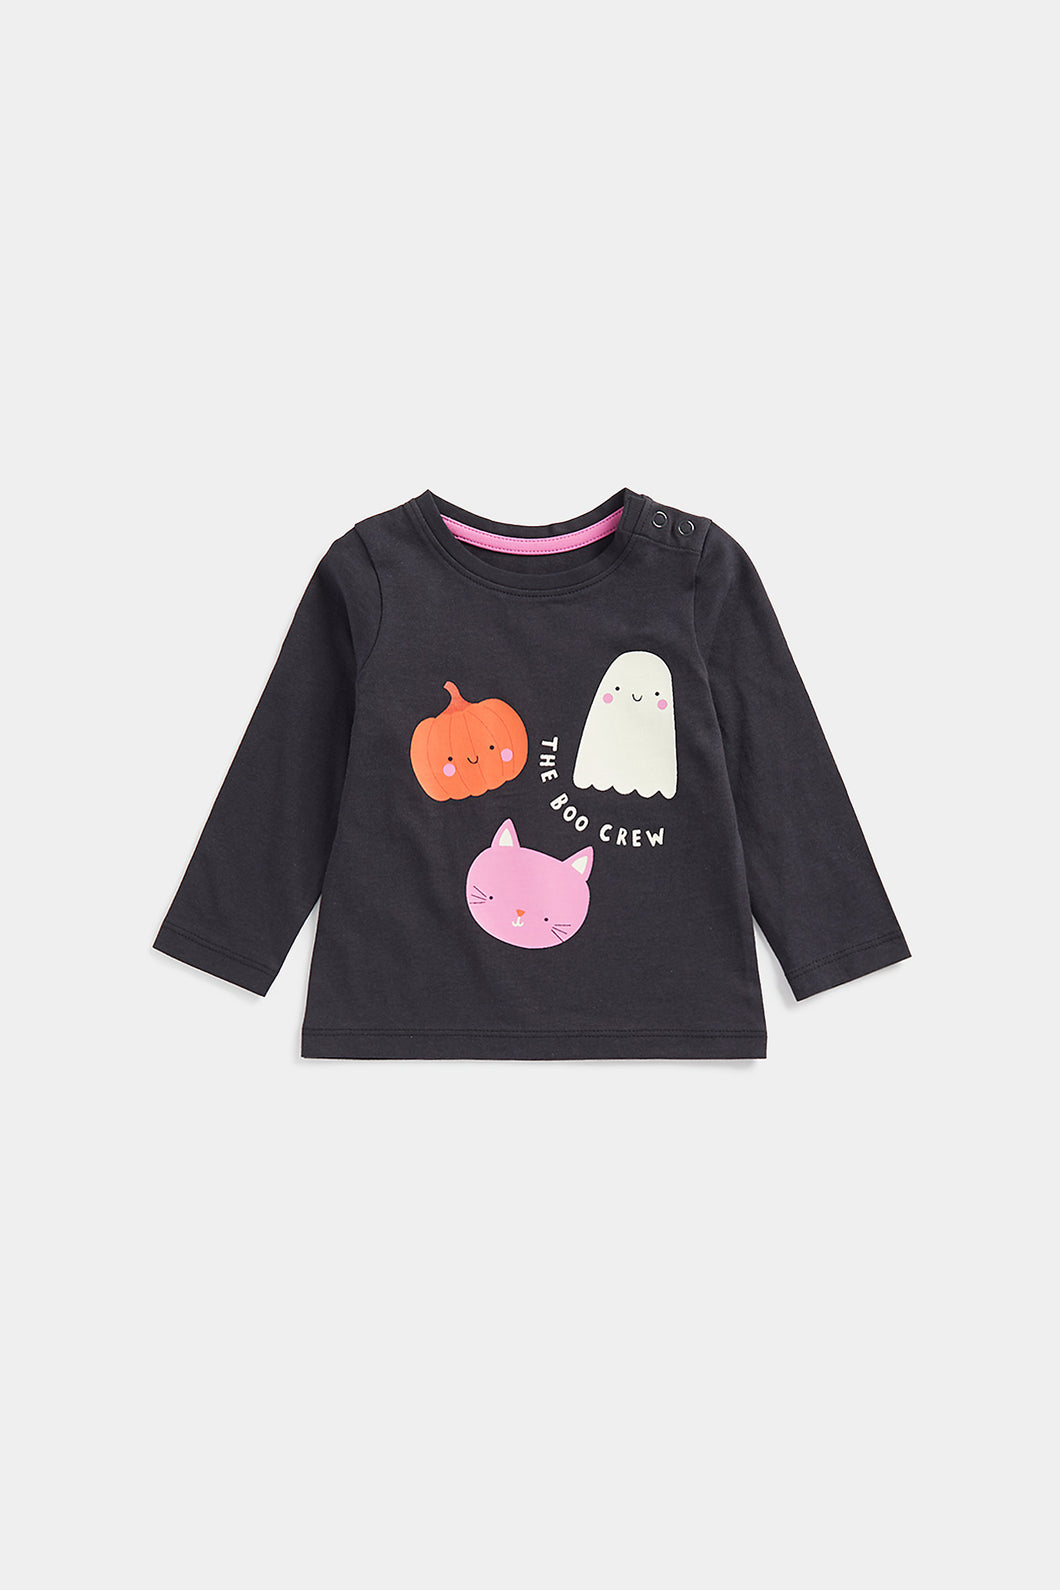 Mothercare Boo Crew Halloween T-Shirt